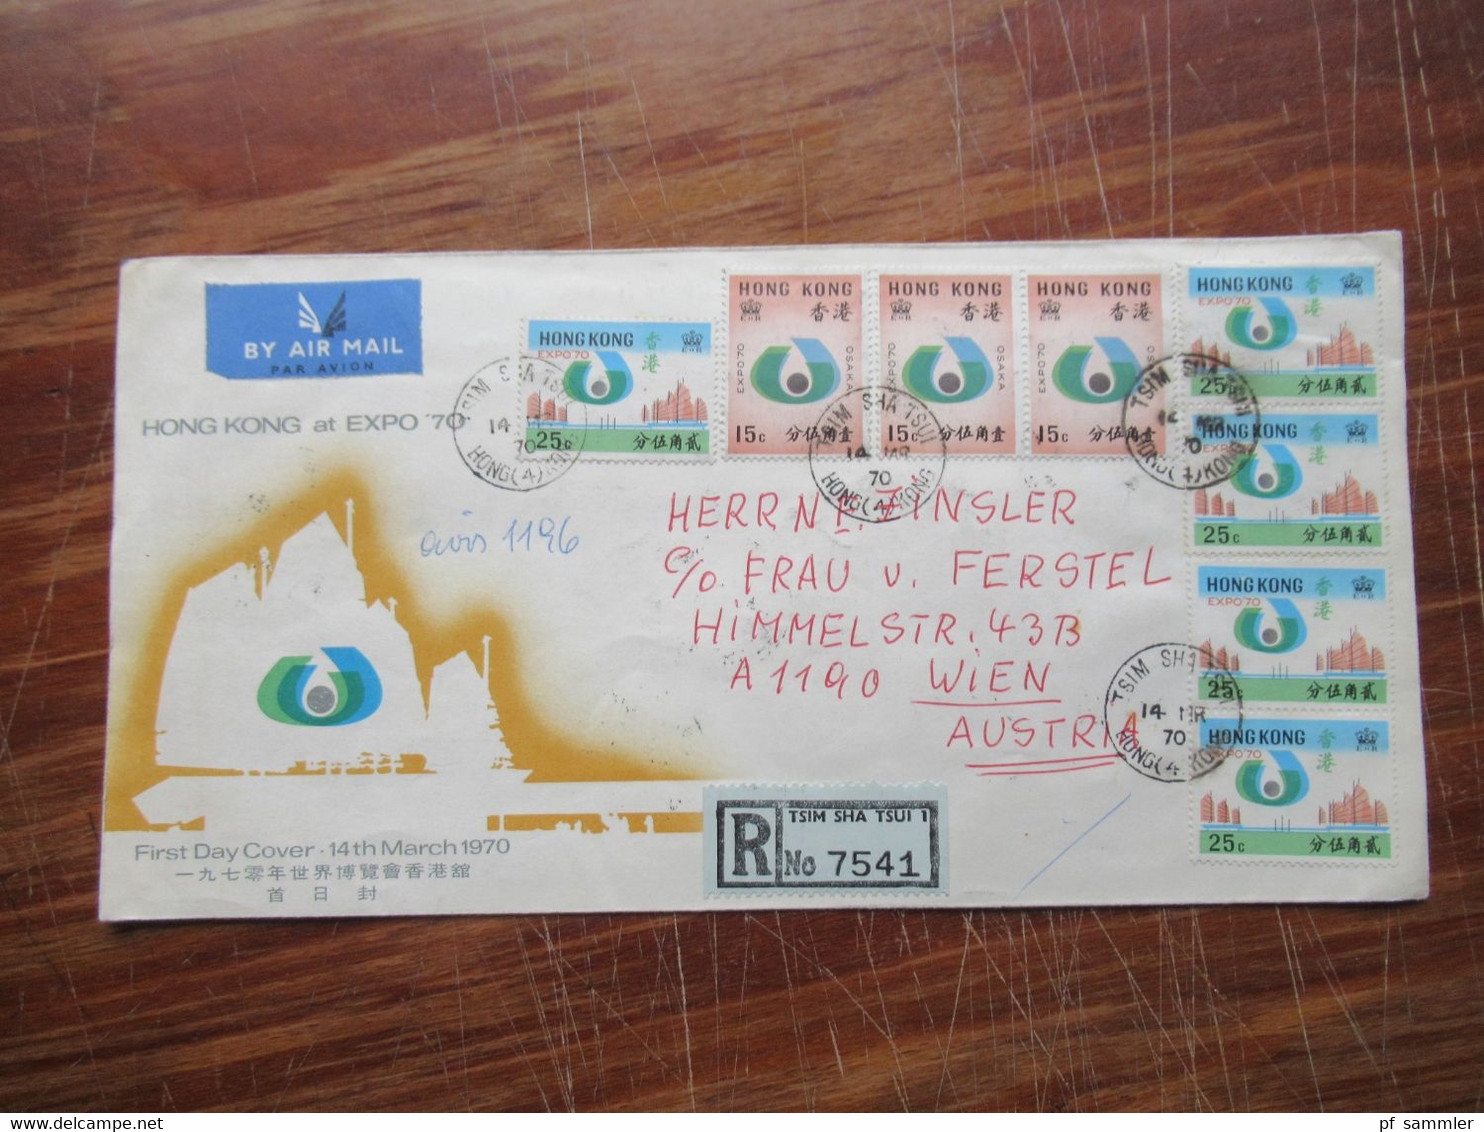 Asien GB Kolonie Hong Kong 1986 3x Belege Registered / Express Mit Hohen Frankaturen! 1x Hong Kong At Expo 1970 - Lettres & Documents